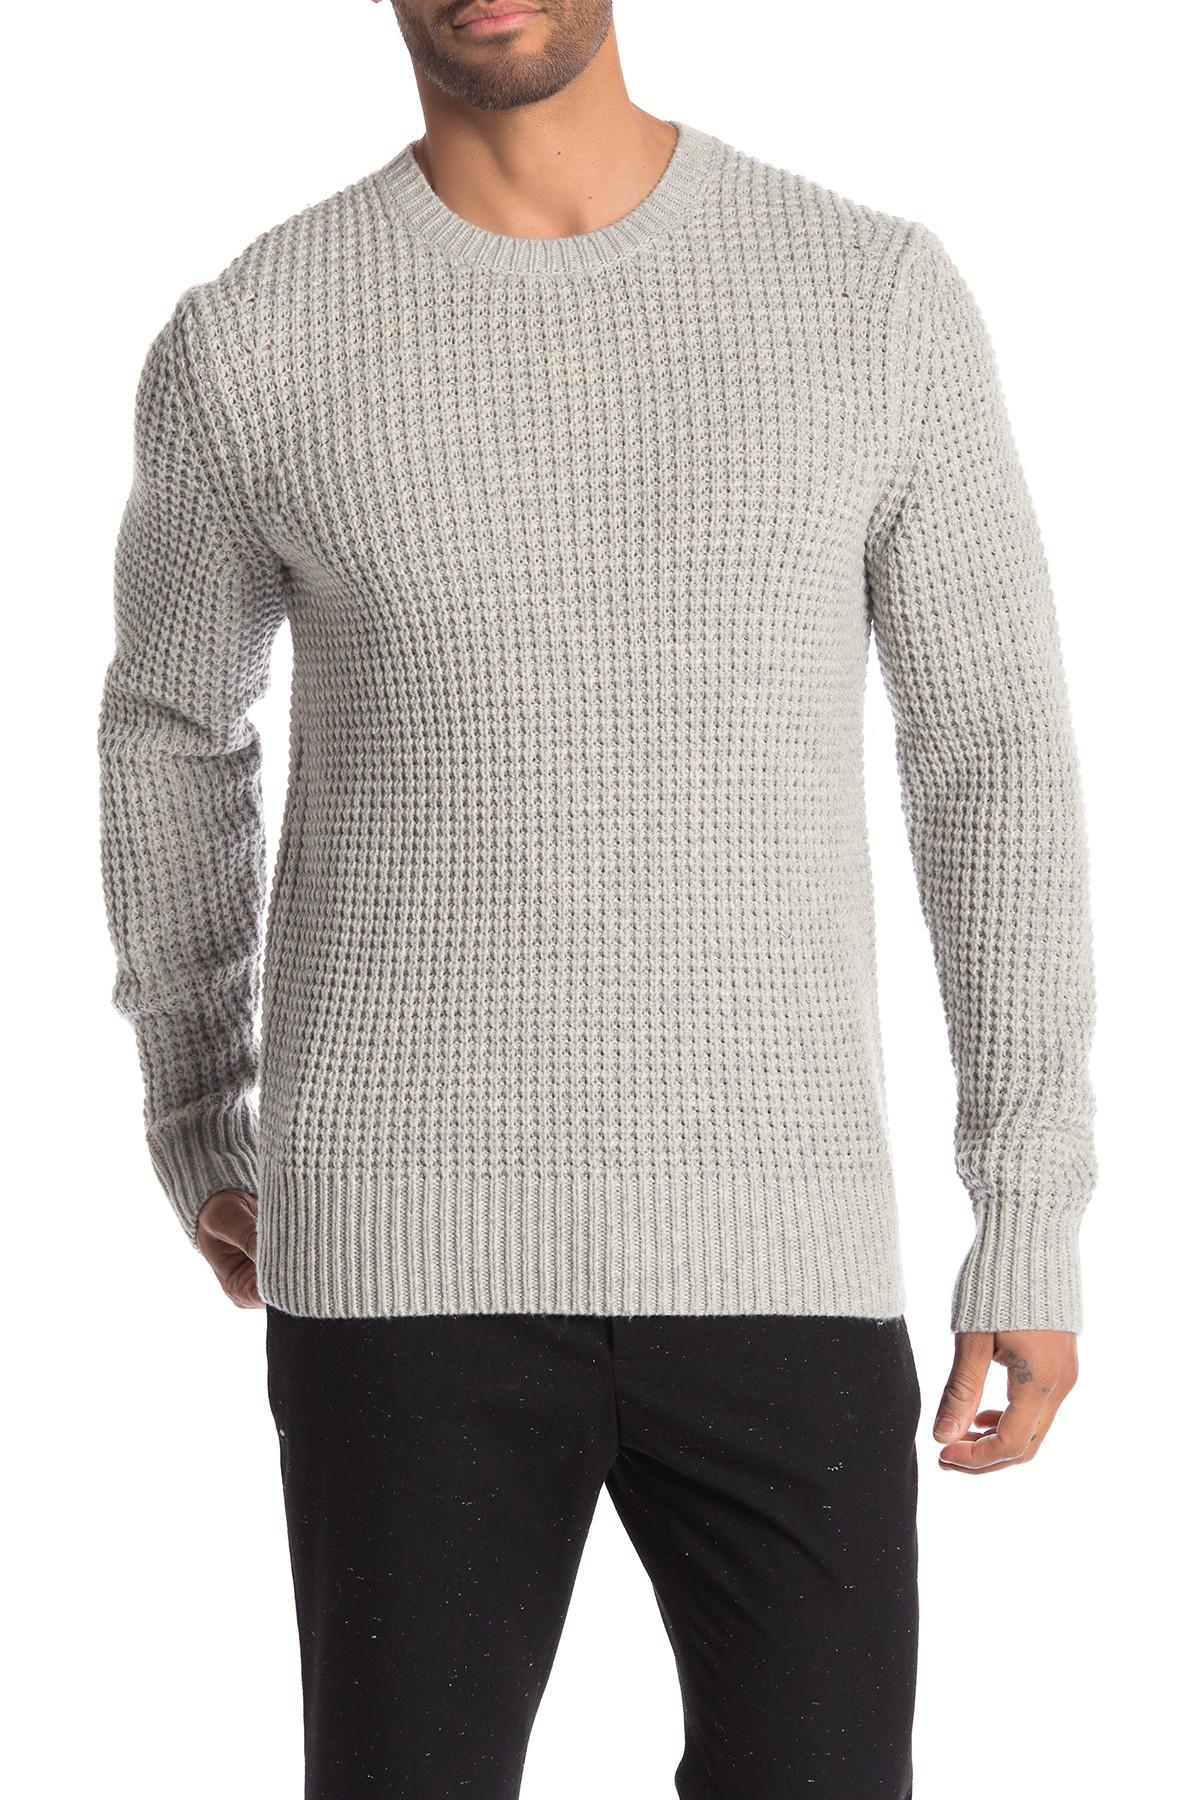 AllSaints Wool Tornn Crew Neck Sweater in Grey Marl (Gray) for Men - Lyst